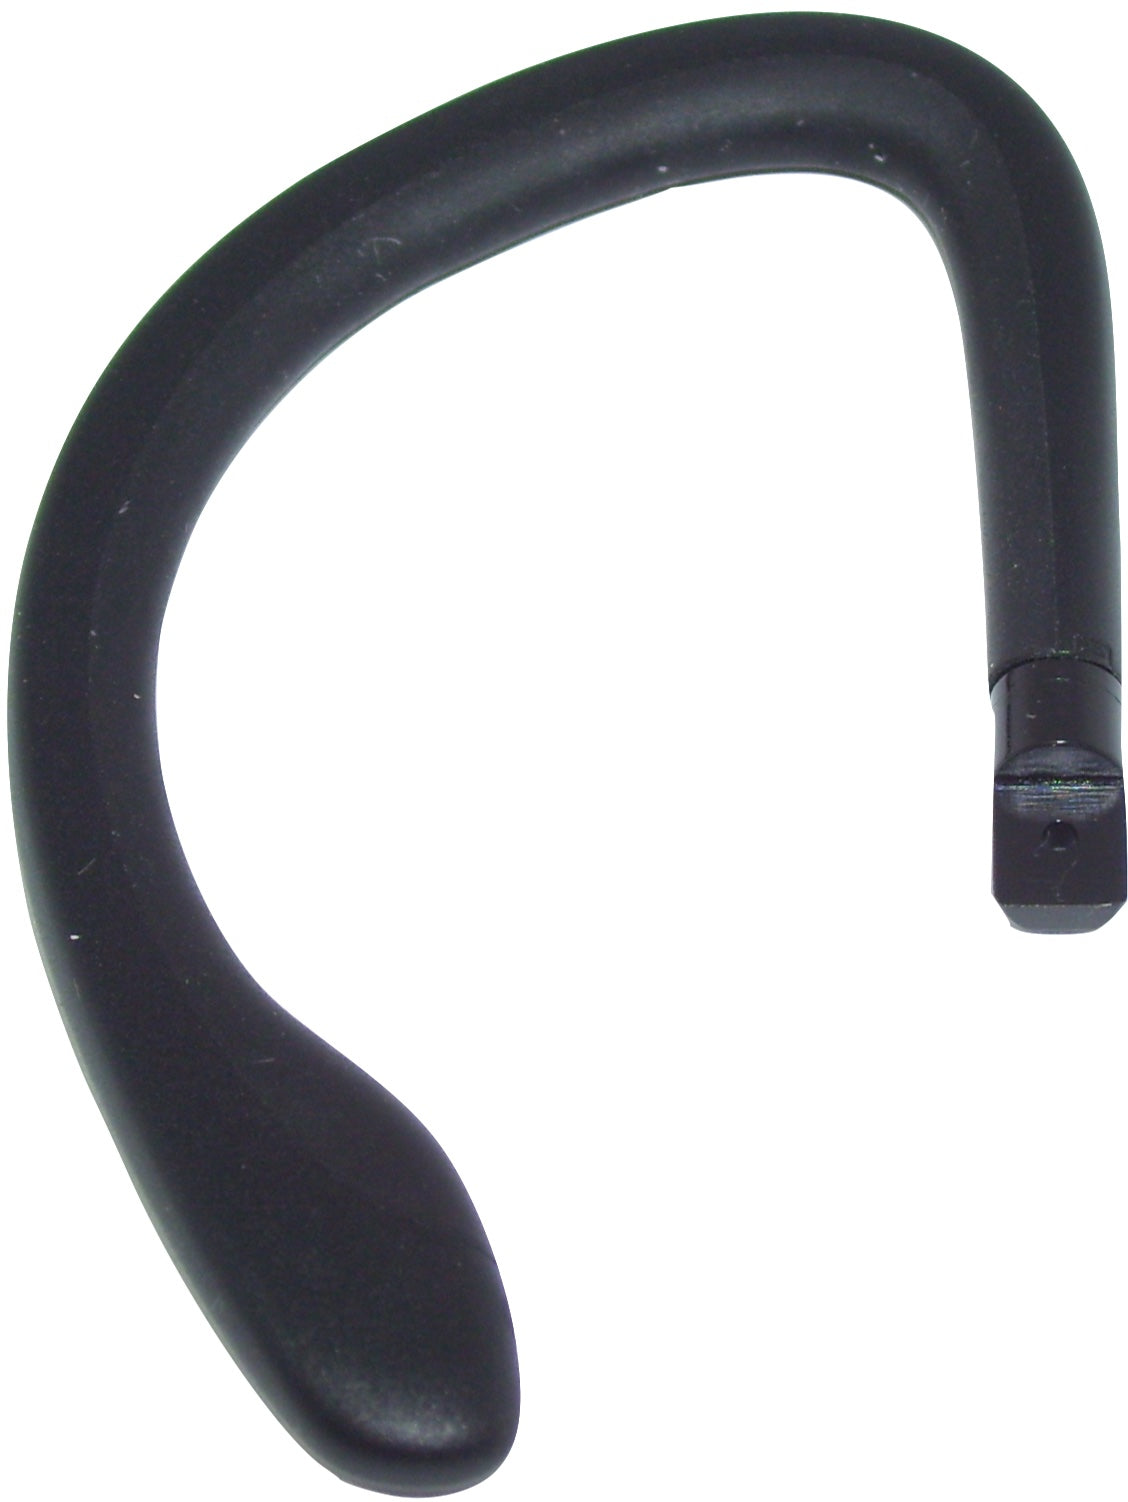 powerbeats ear hook replacement